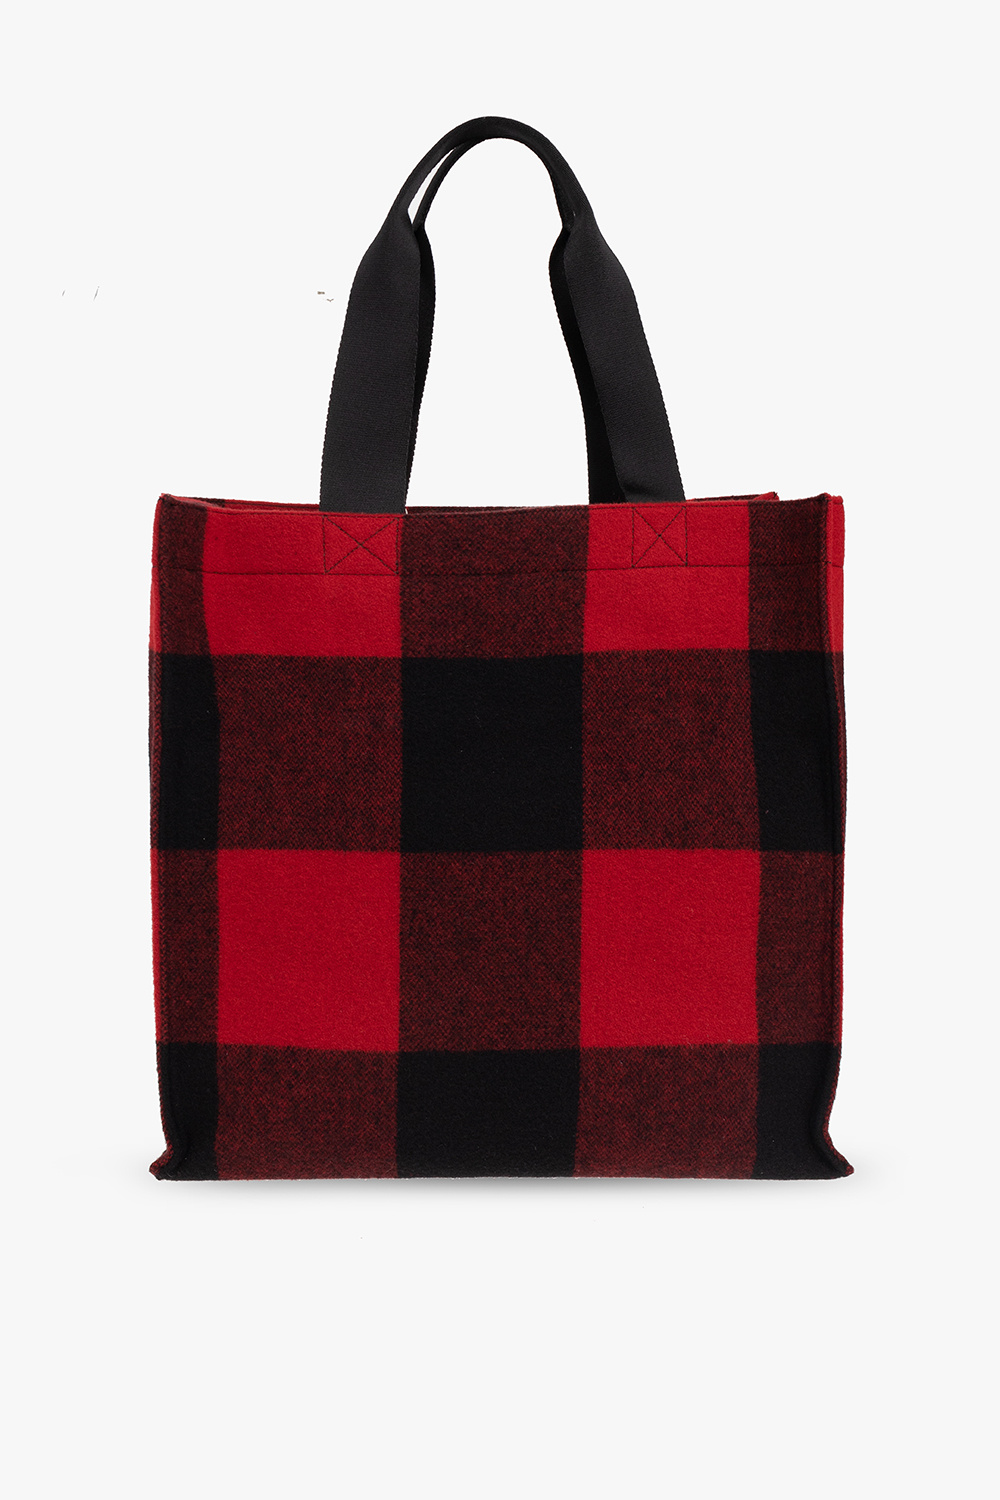 Woolrich Shopper Marmont bag